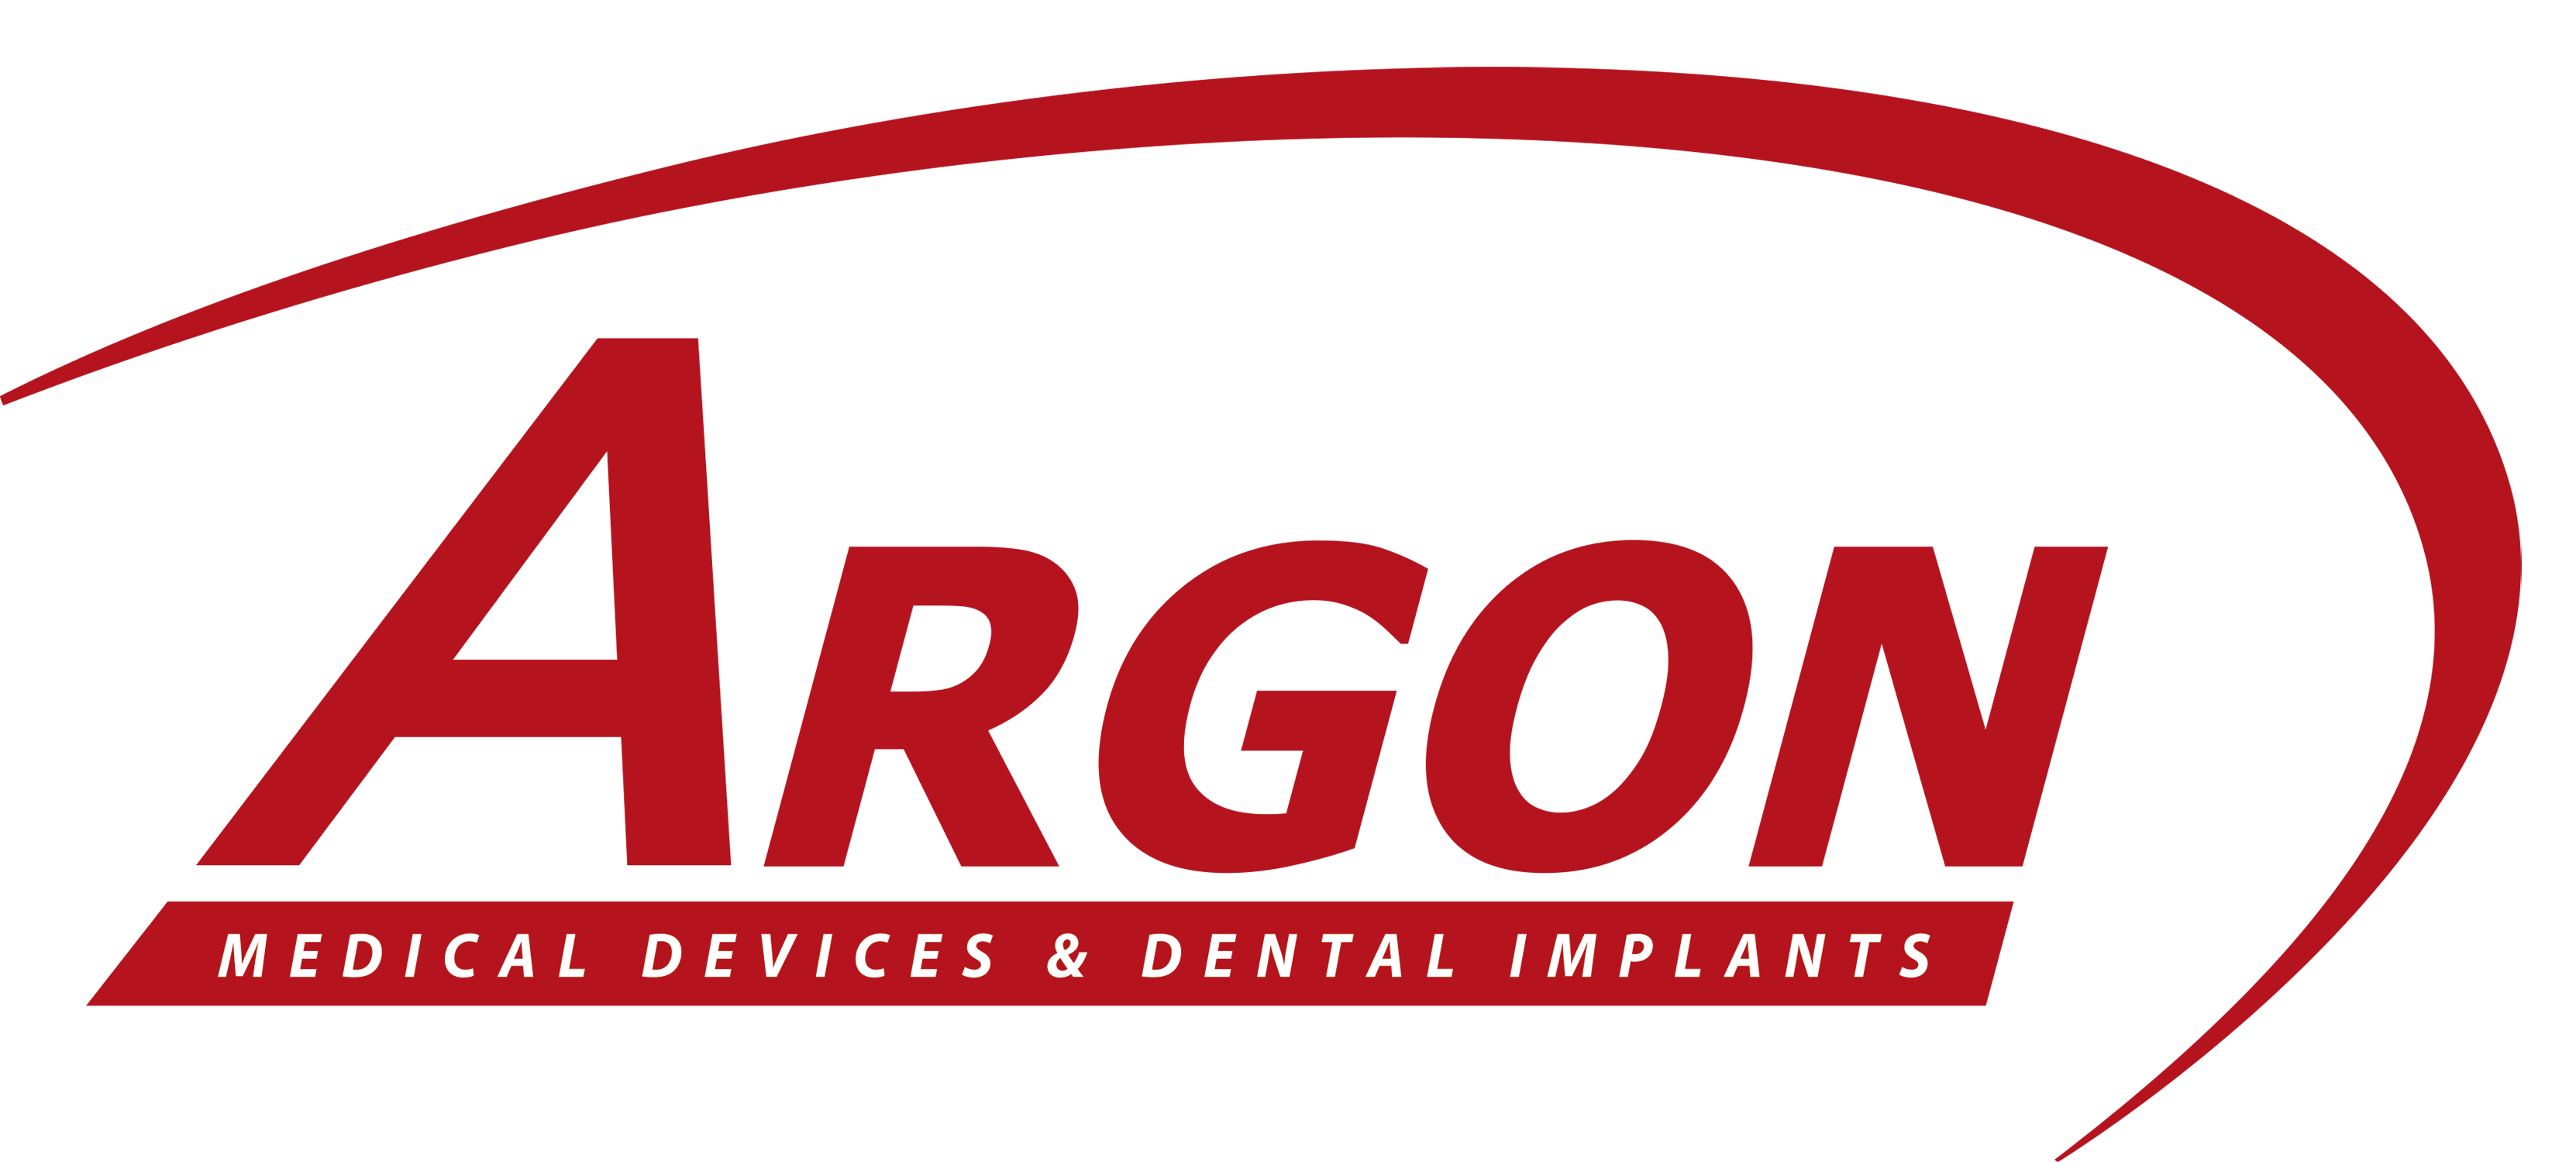 Argon Dental Vertriebs Gmbh & Co. KG